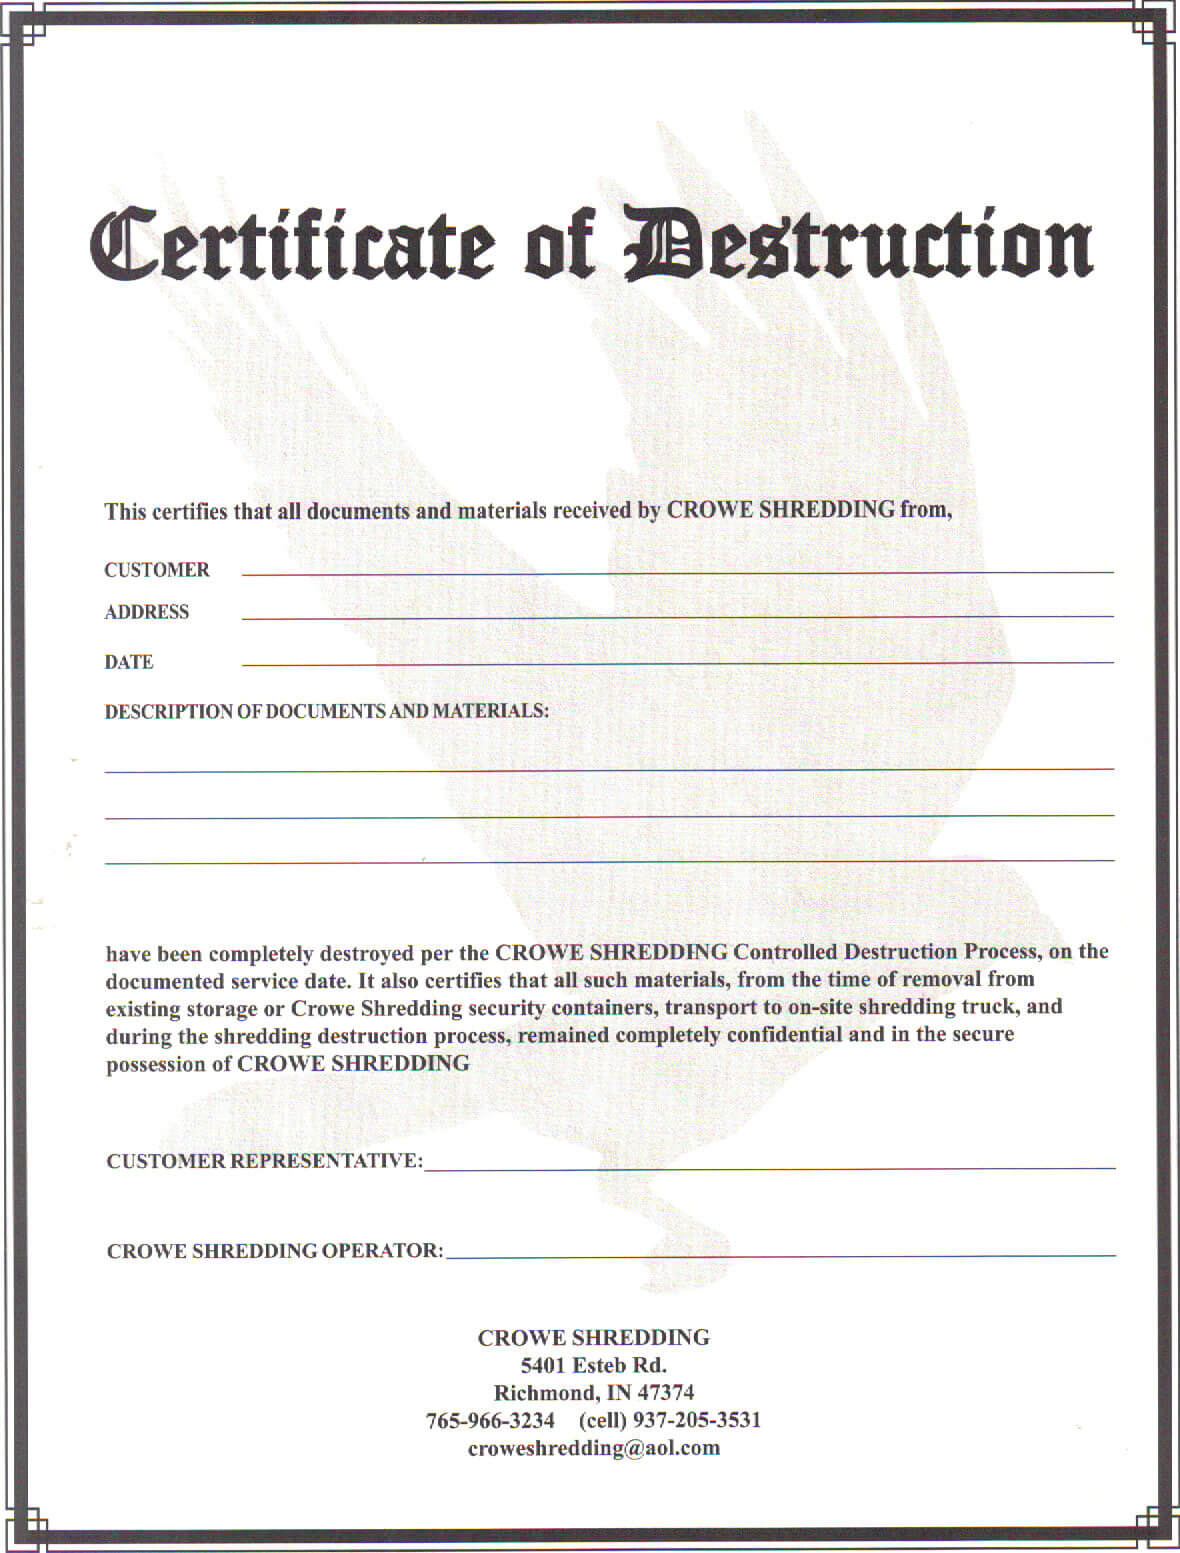 008 Certificate Of Destruction Form 241910 Template Throughout Hard Drive Destruction Certificate Template